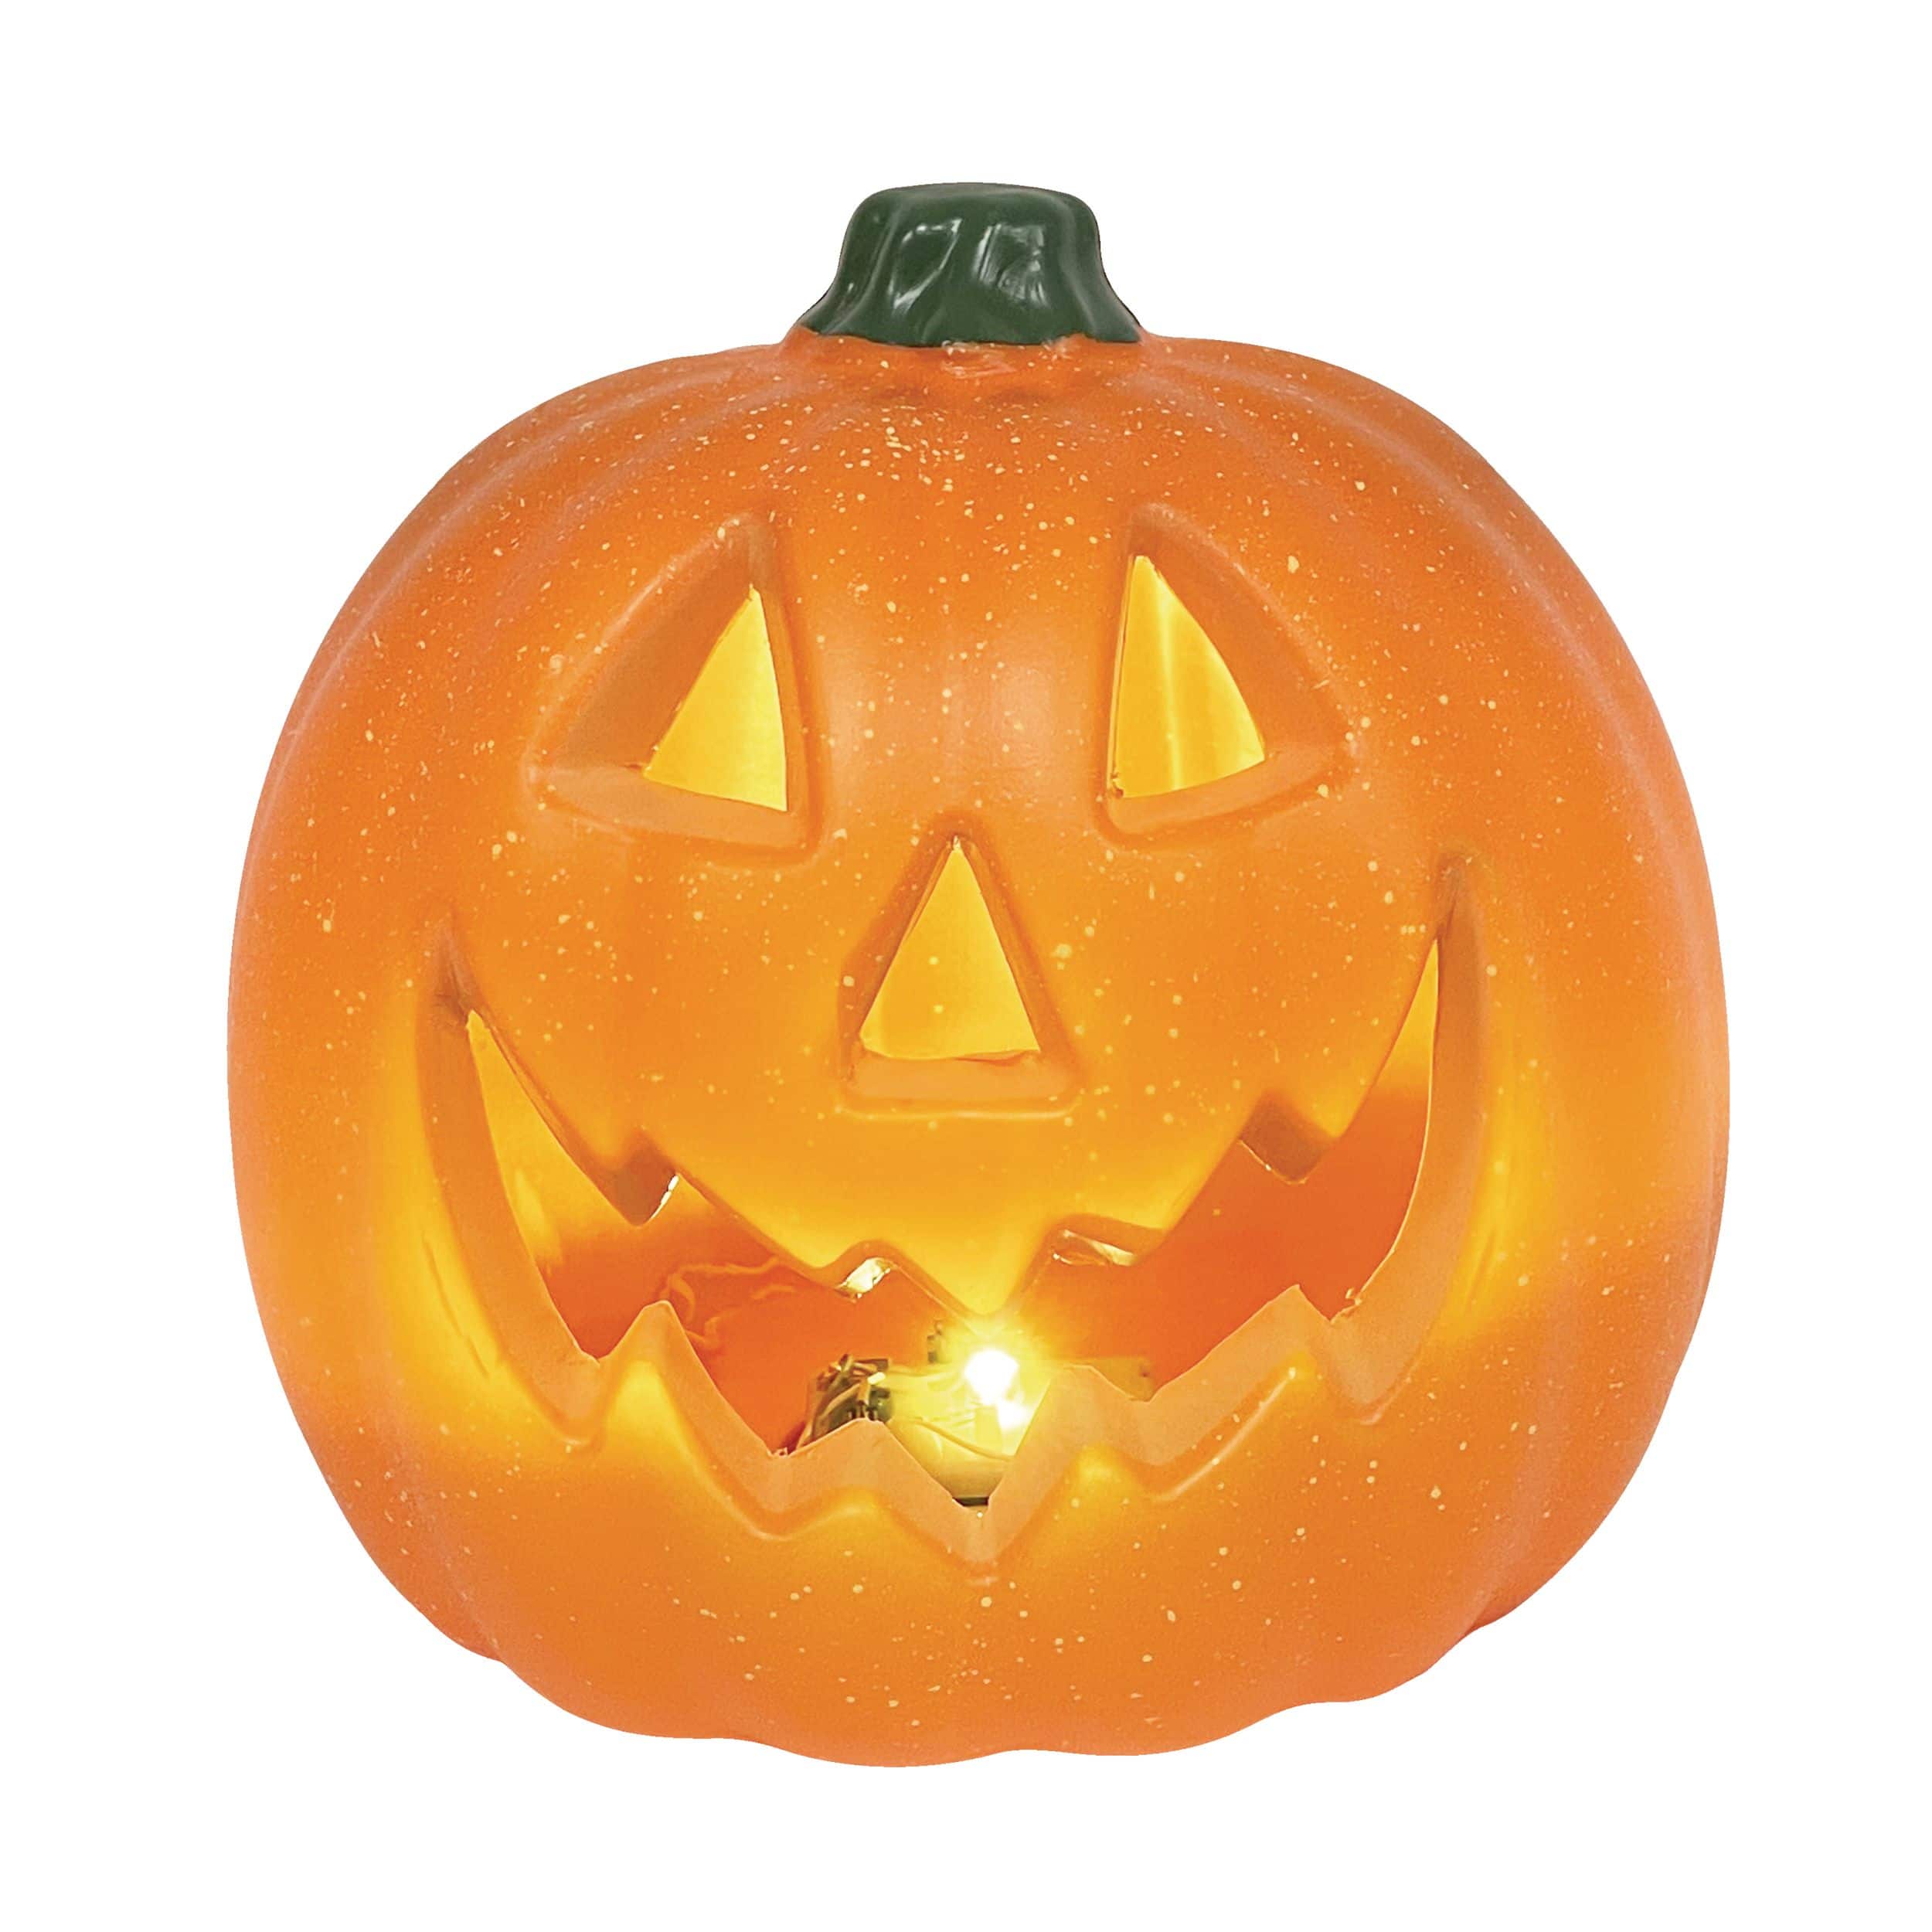 For Living Jack-O'-Lantern Light-Up Pumpkin, Orange, 9-in, Light